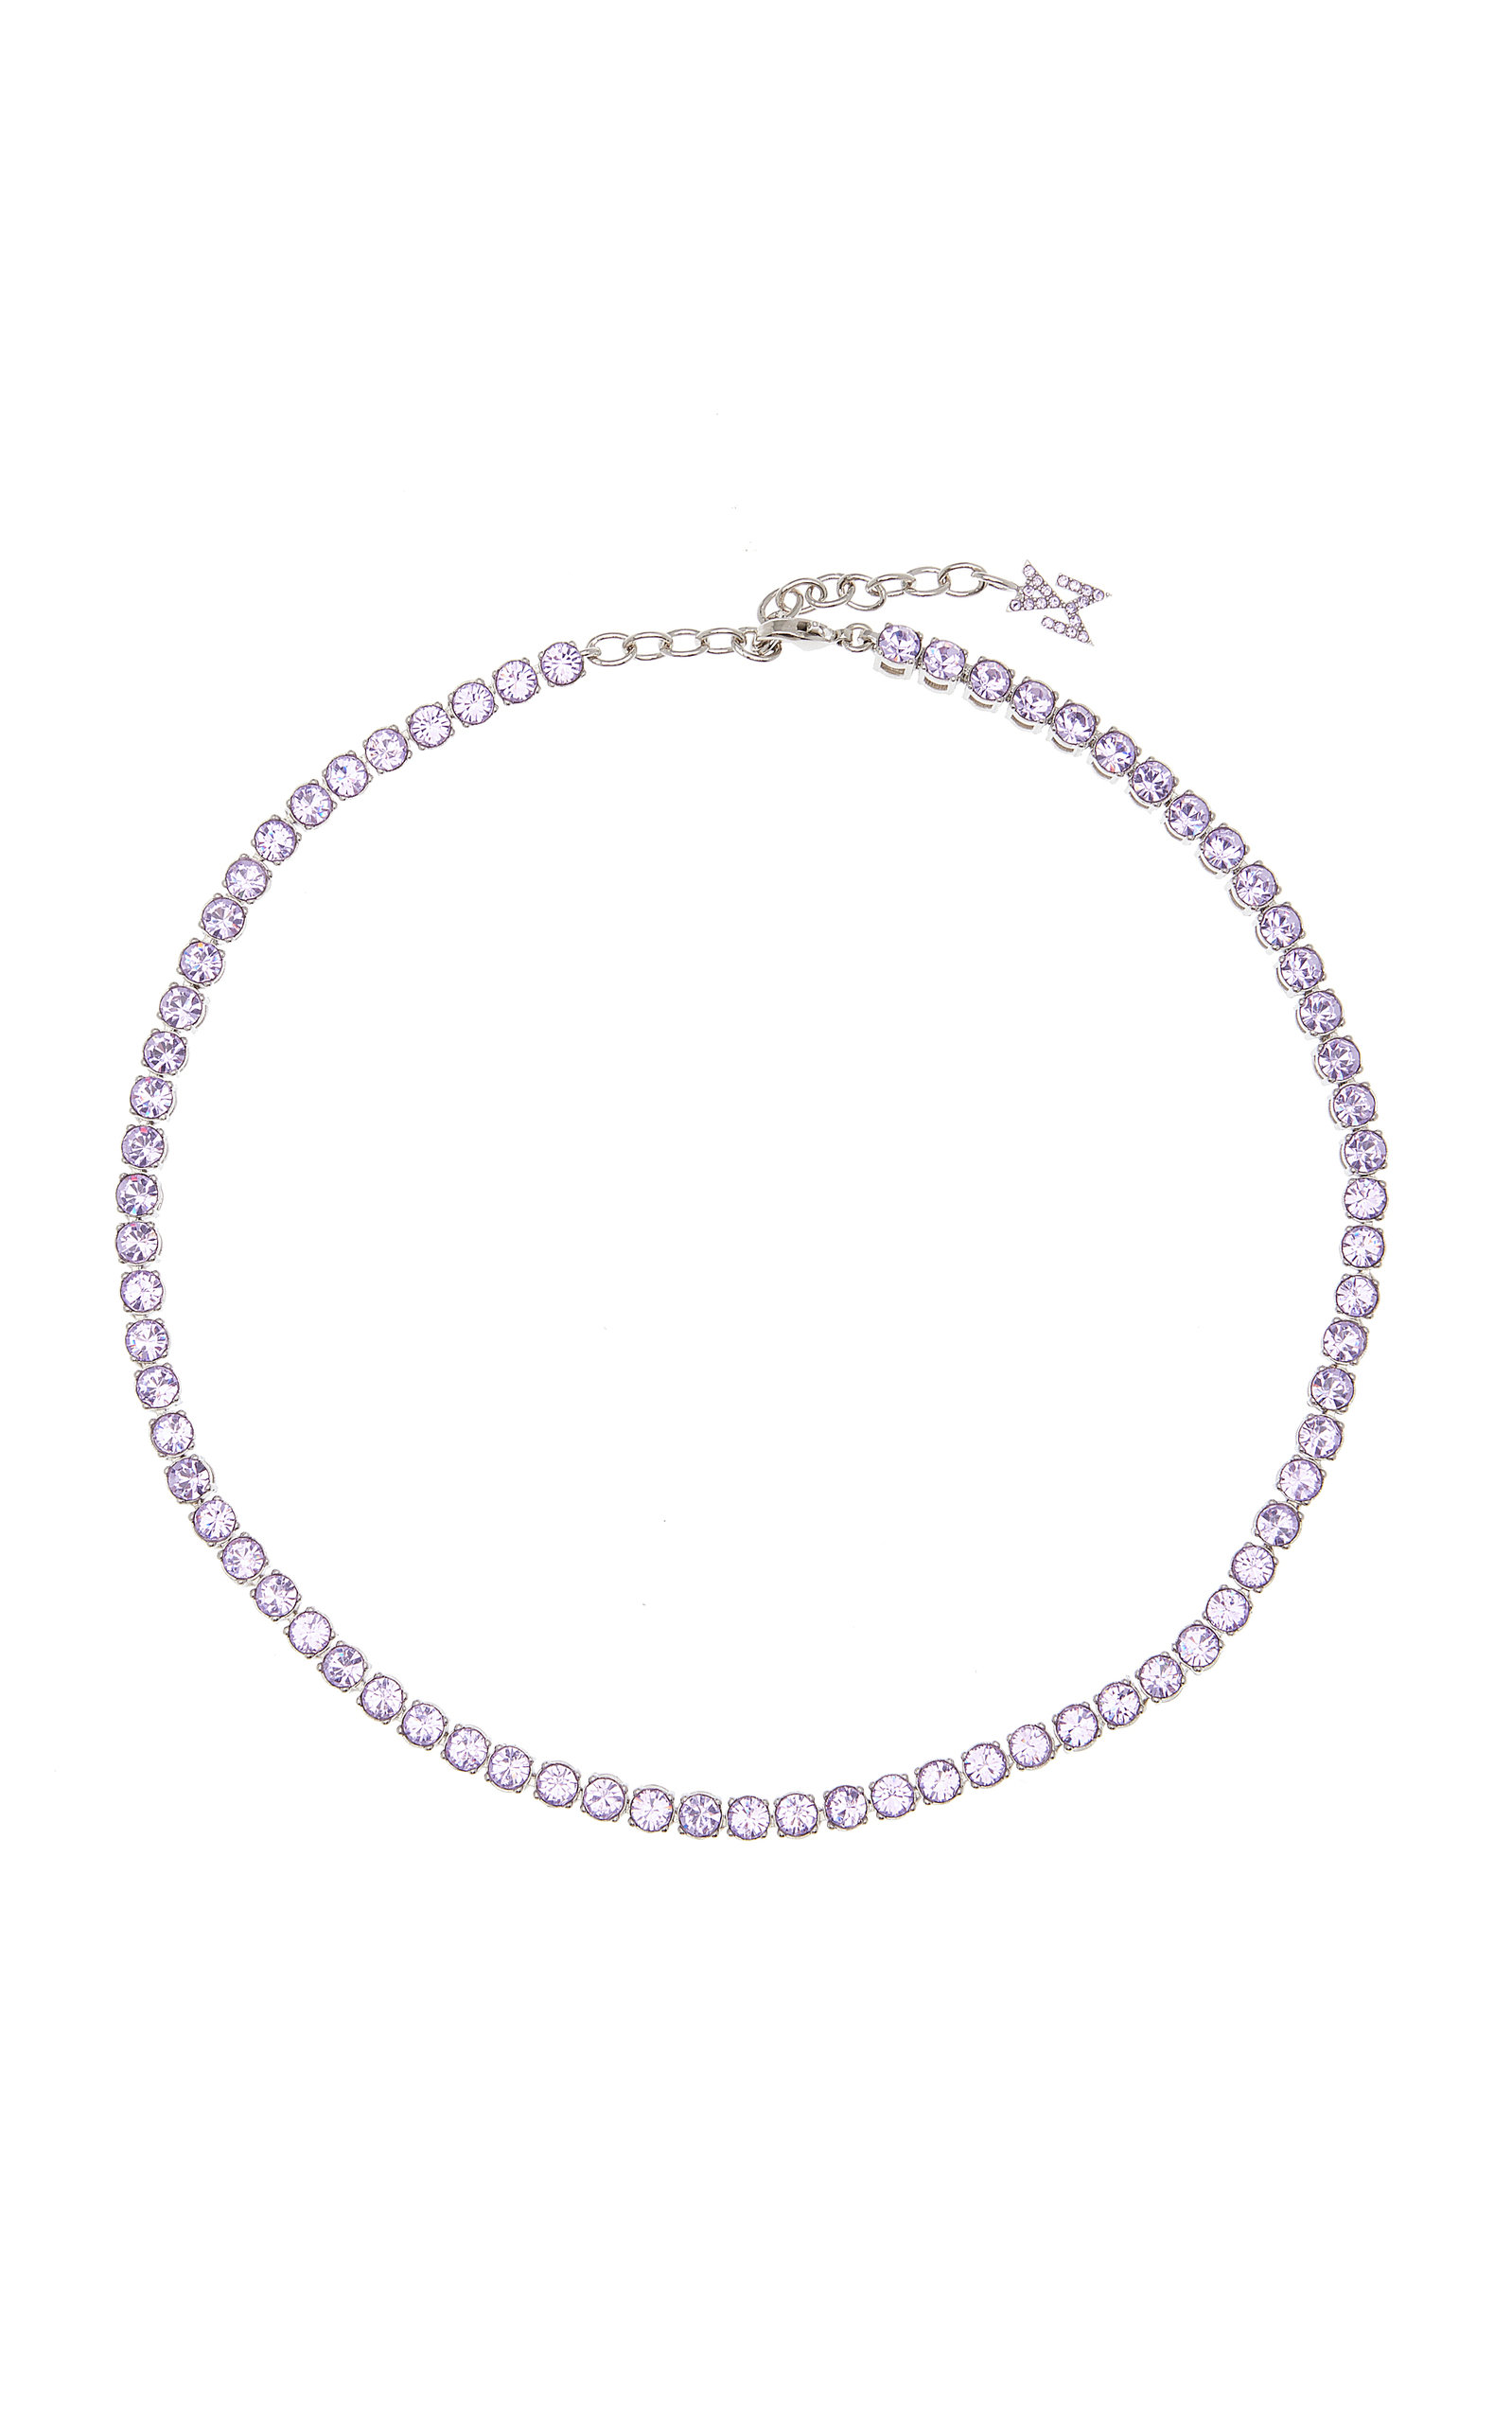 Amina Muaddi - Women's Crystal Tennis Necklace - Purple/orange - Moda Operandi - Gifts For Her